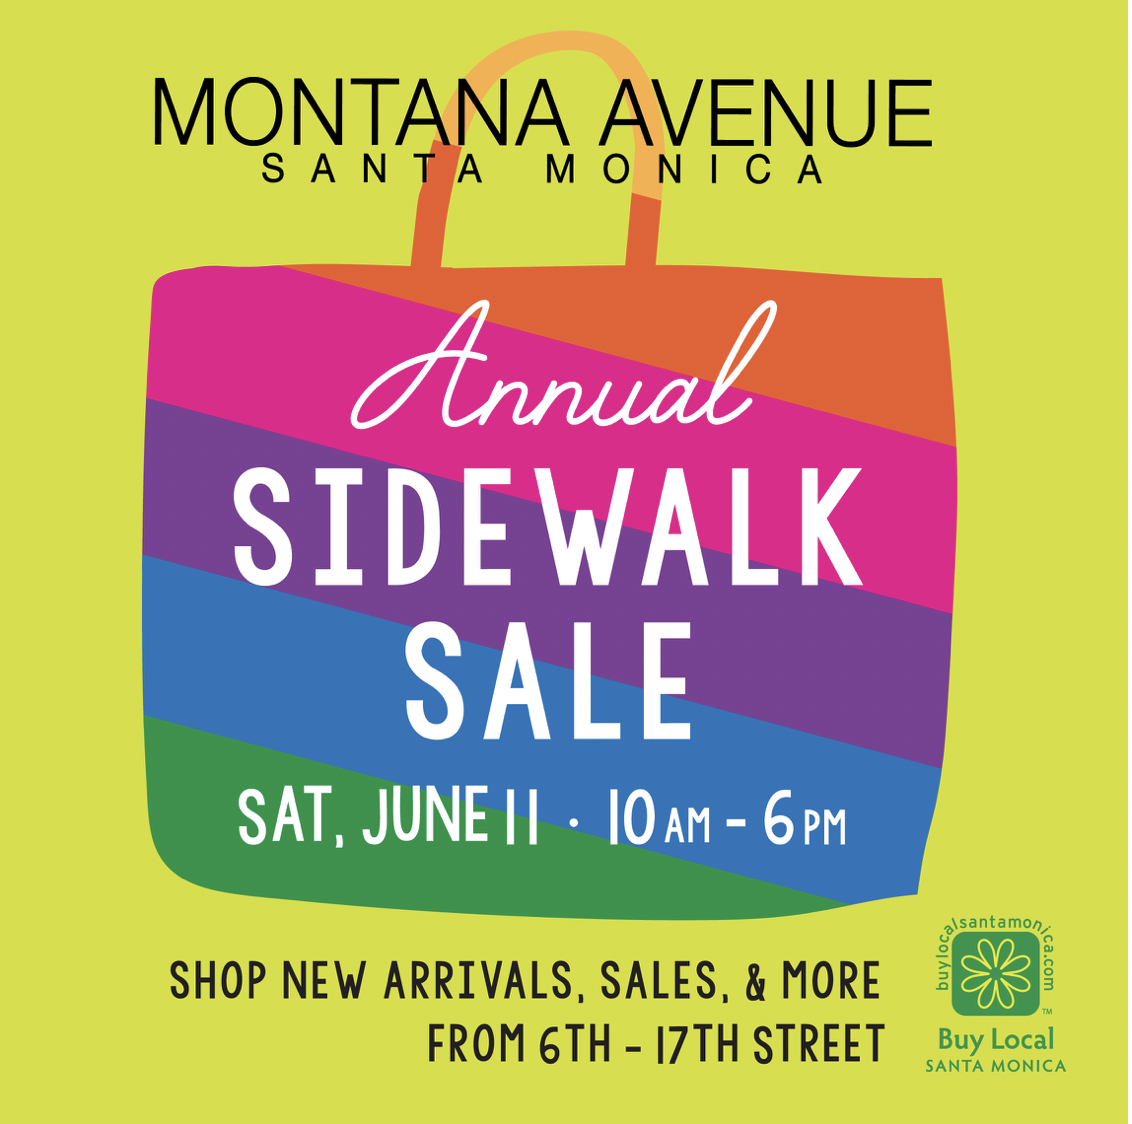 Montana Avenue Sidewalk Sale